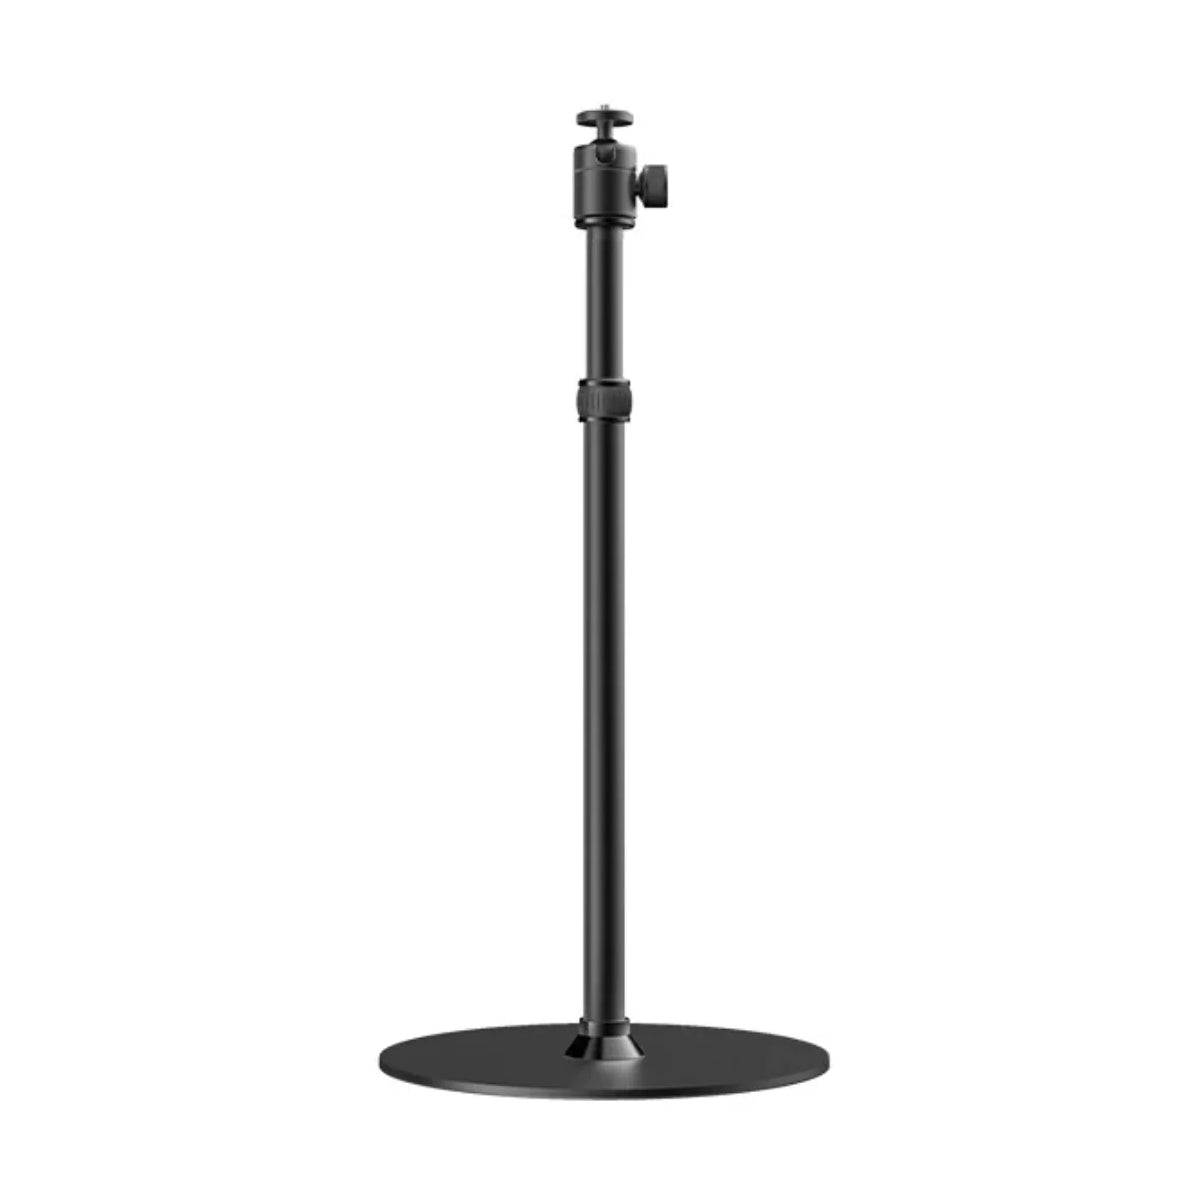 Formovie Hight Adjustable Floor Stand for Long Throw Projectors